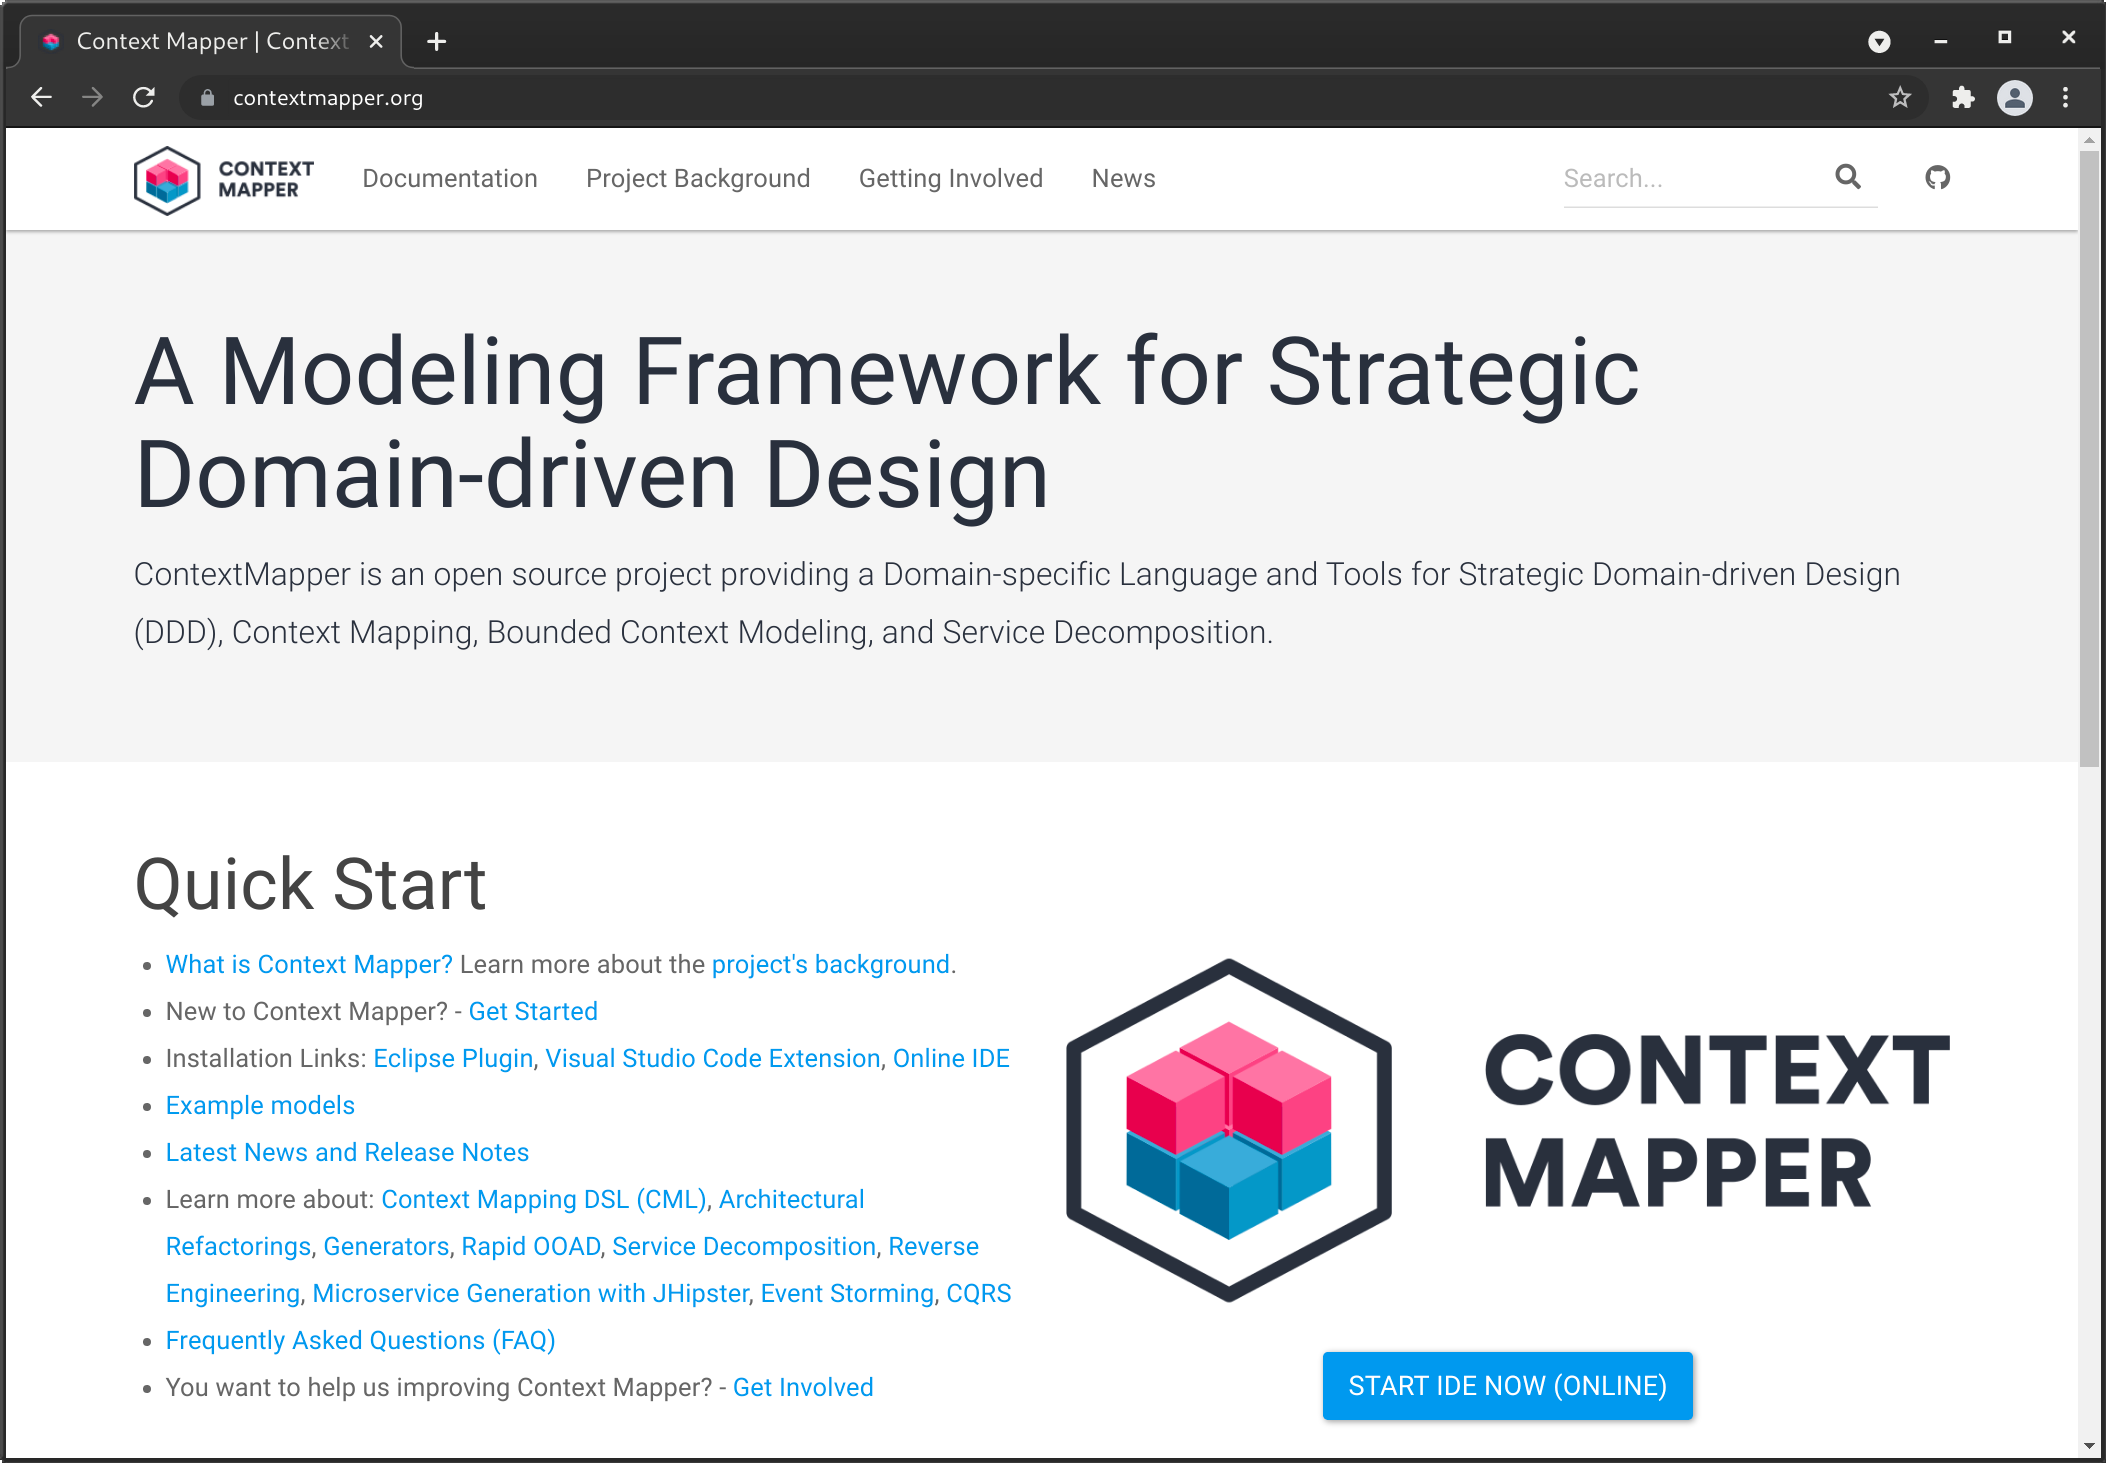 Context Mapper Website (contextmapper.org)